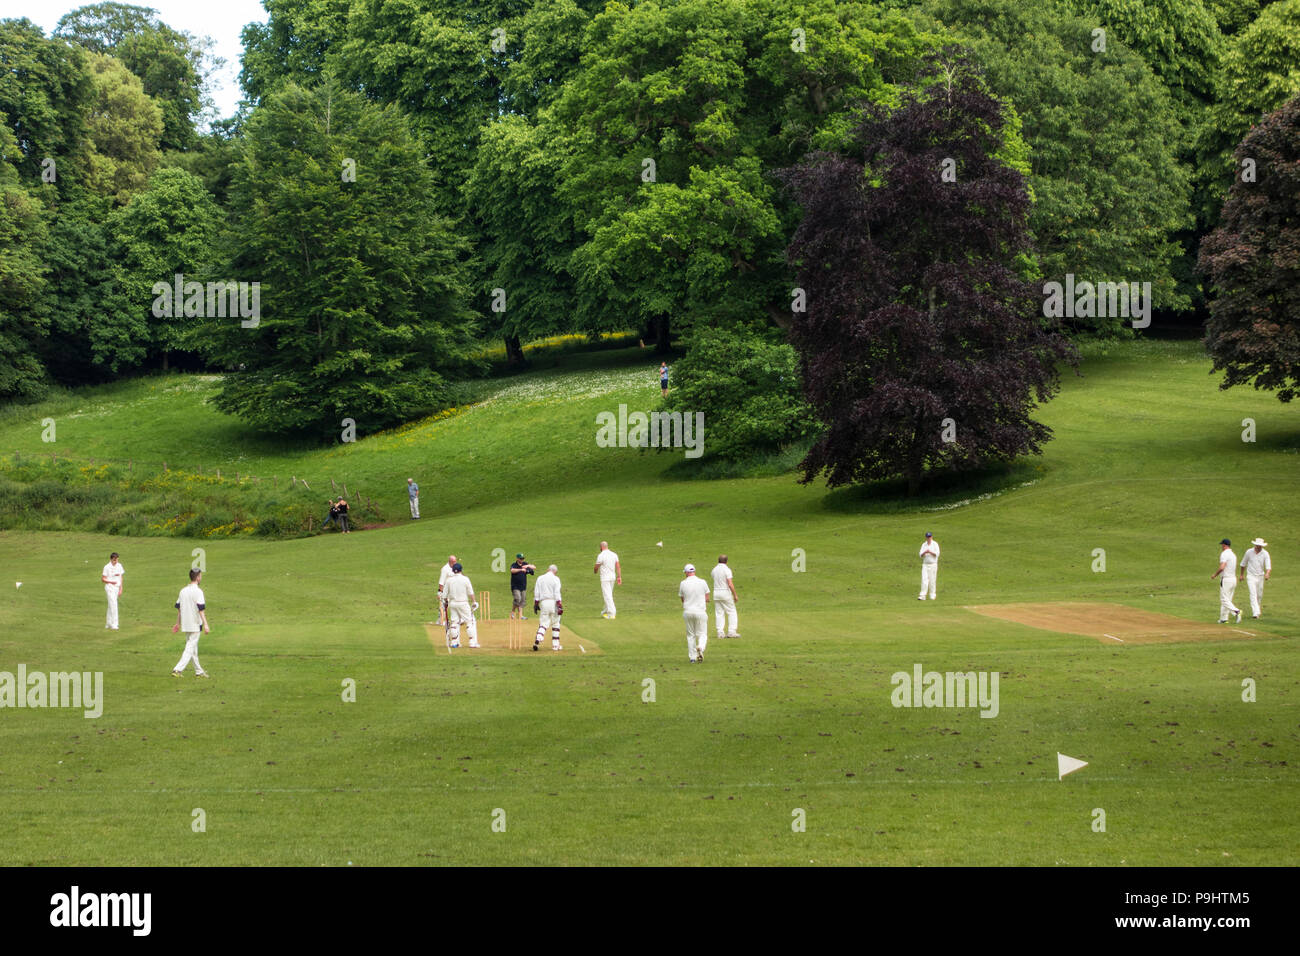 Players on the cricket grounds, Cockington Village, Torquay, Devon, UK Stock Photo